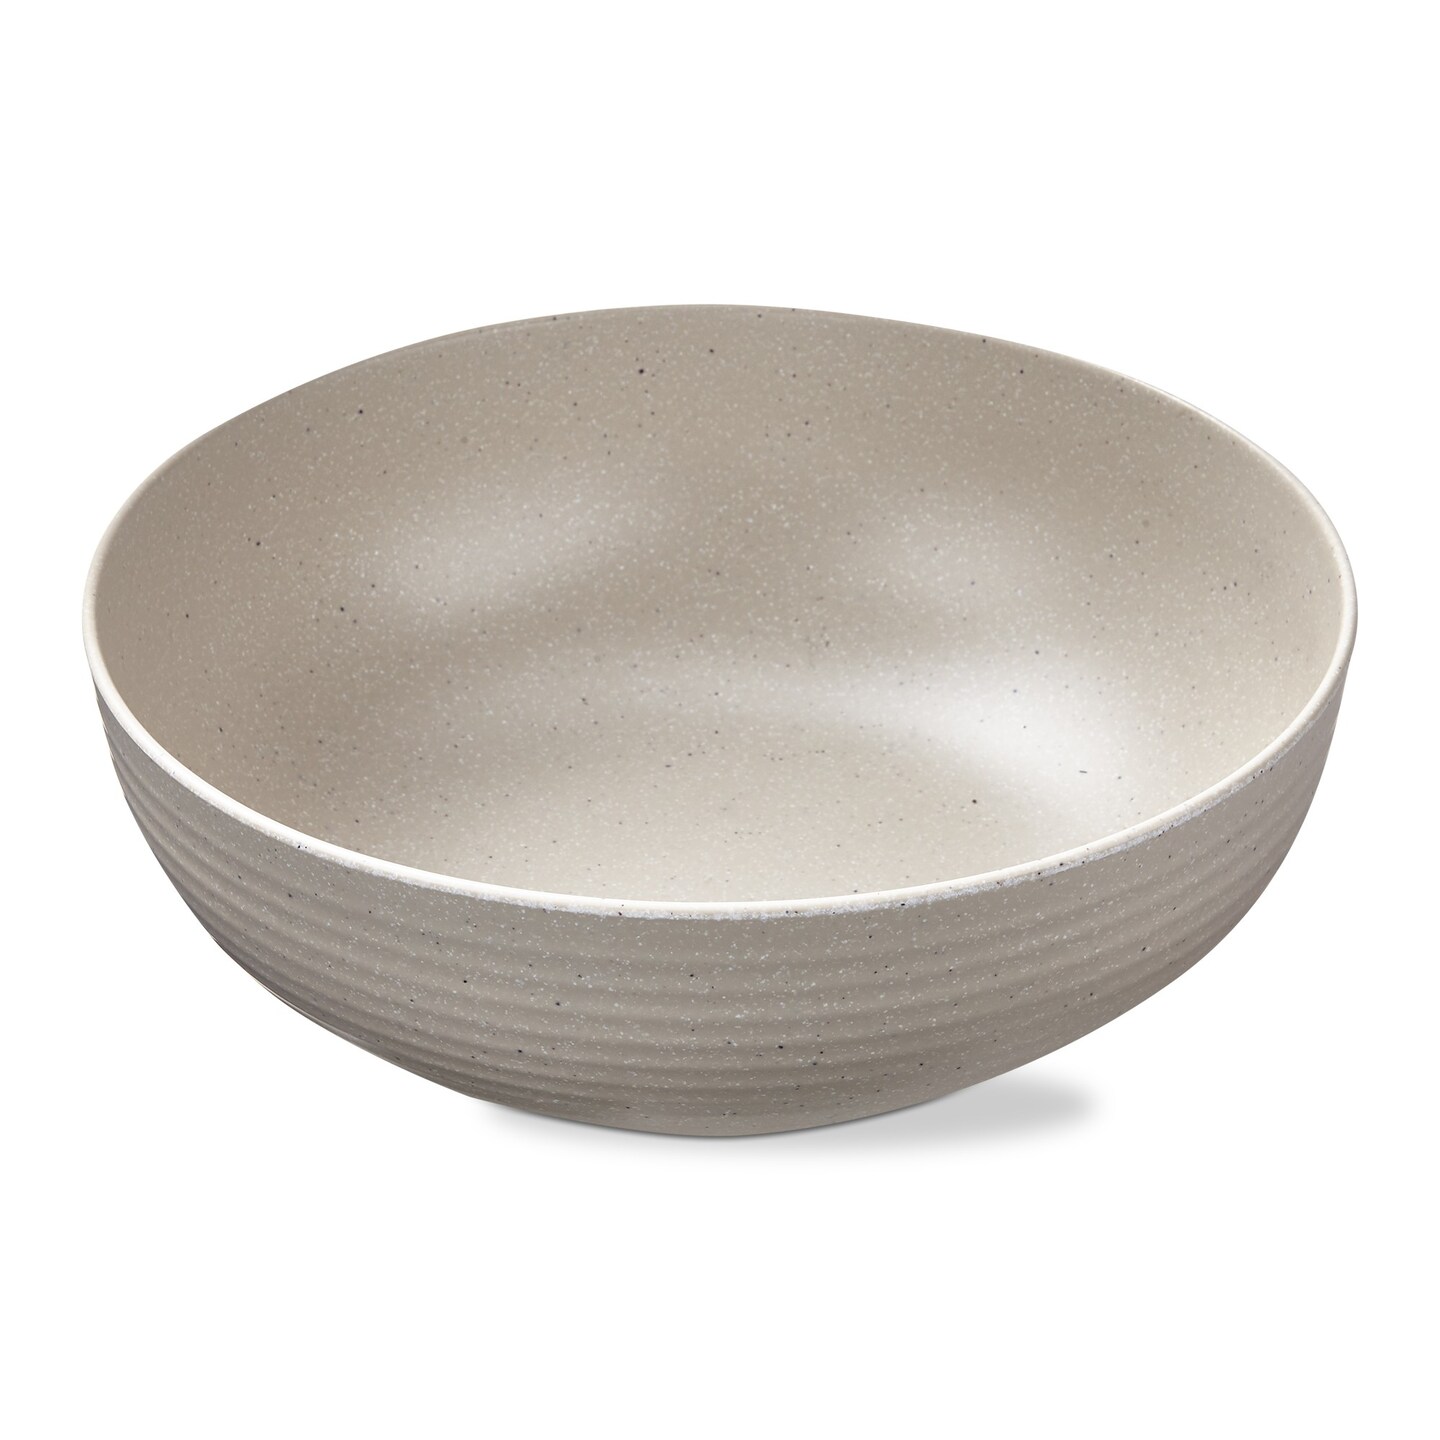 Cream Brooklyn Melamine Plastic Dinning Serving Bowl Dishwasher Safe Indoor/Outdoor 12x12 inch Serving Bowl